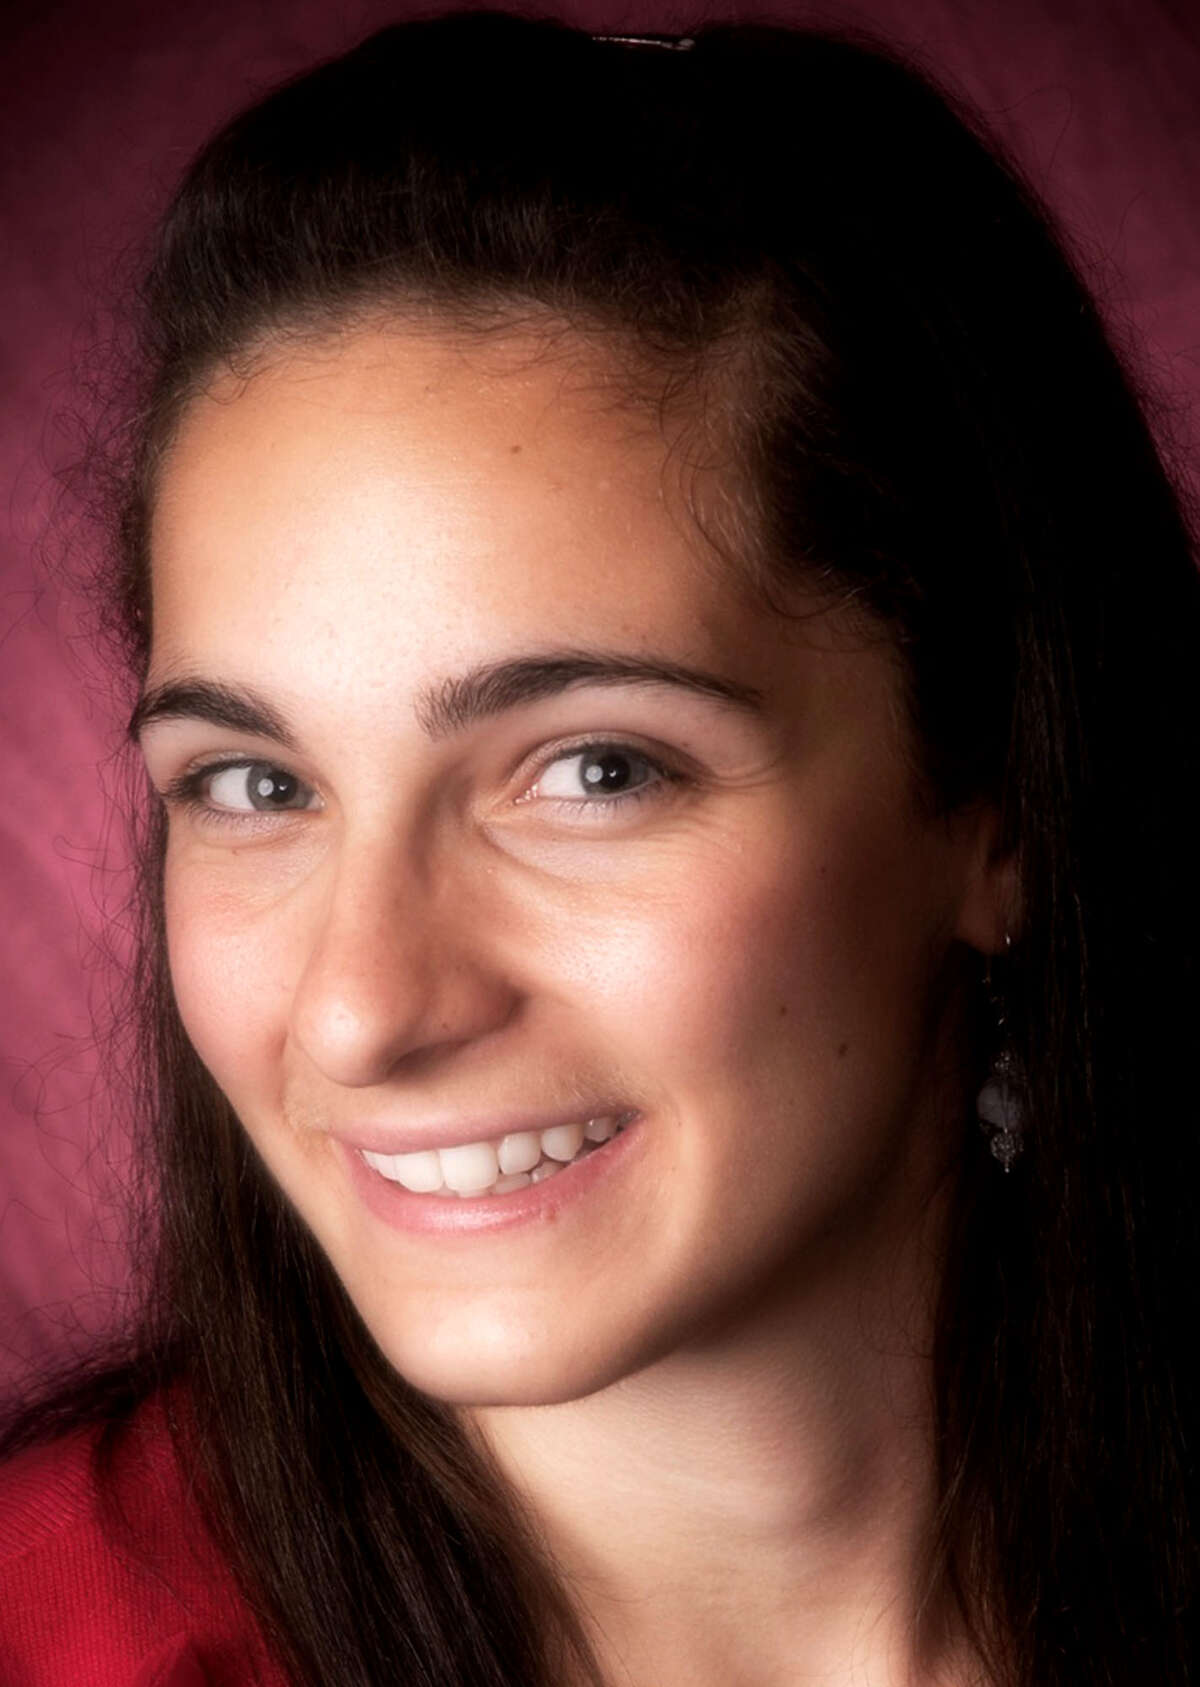 Melinda Fragomeli, Shepaug Valley High School Class of 2012